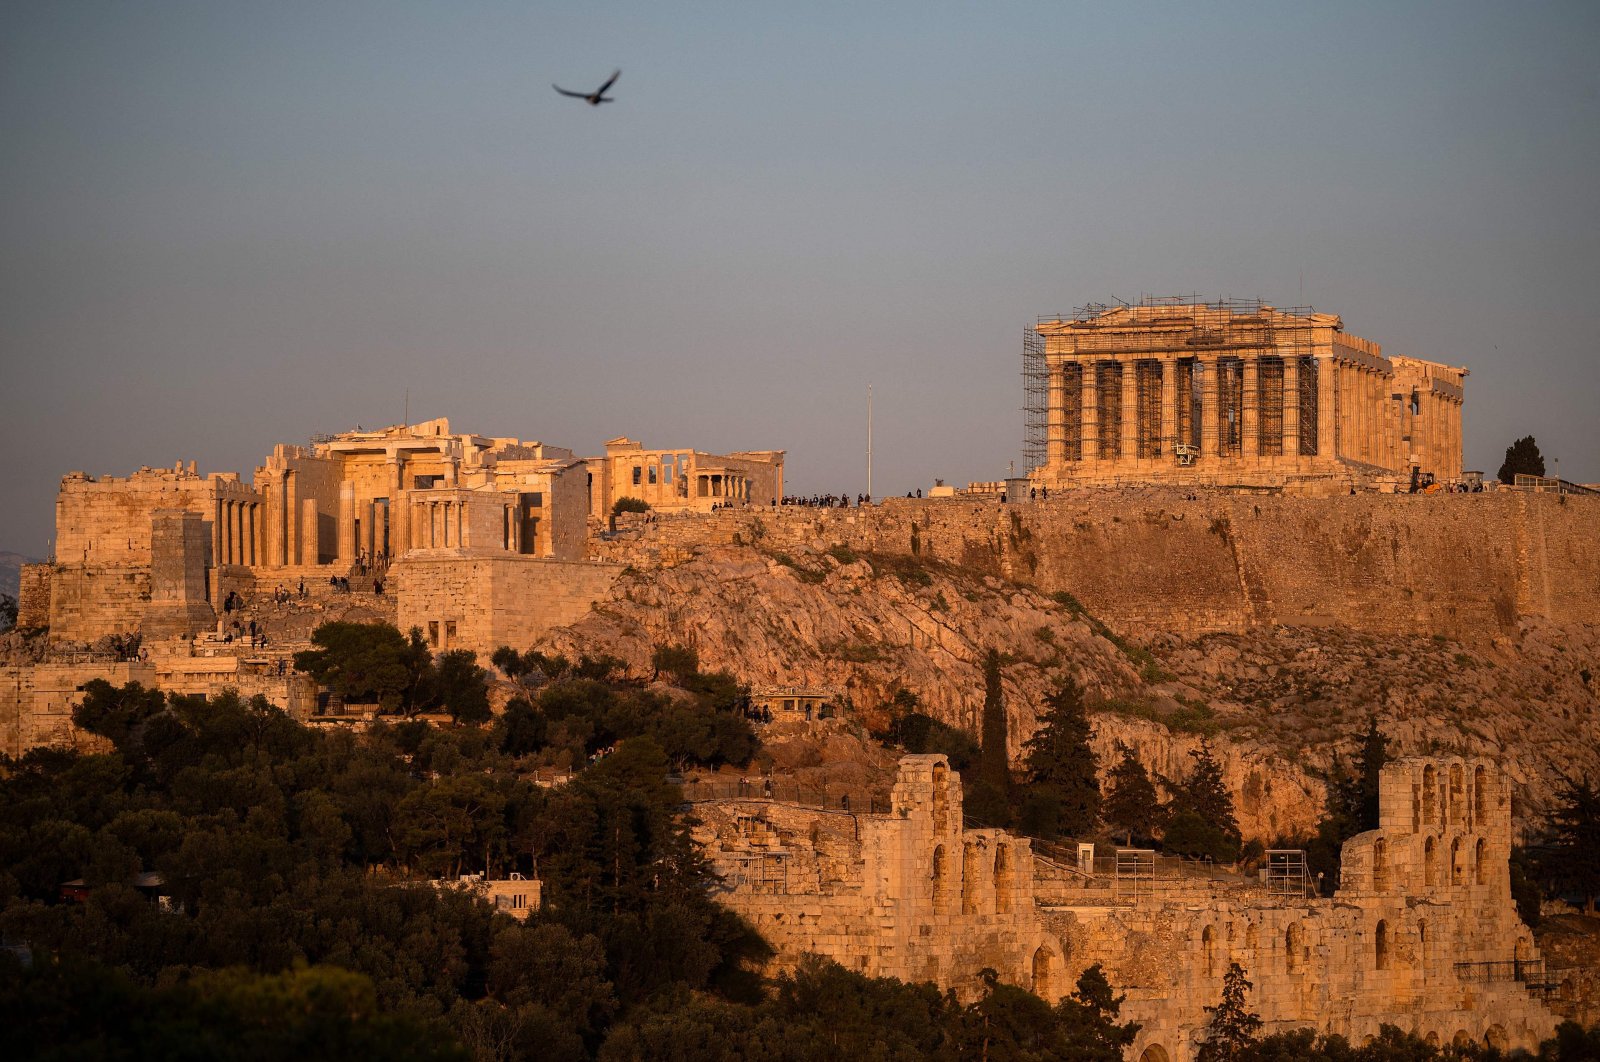 Inggris mengadakan ‘pembicaraan rahasia’ dengan Yunani untuk pengembalian Parthenon Marbles